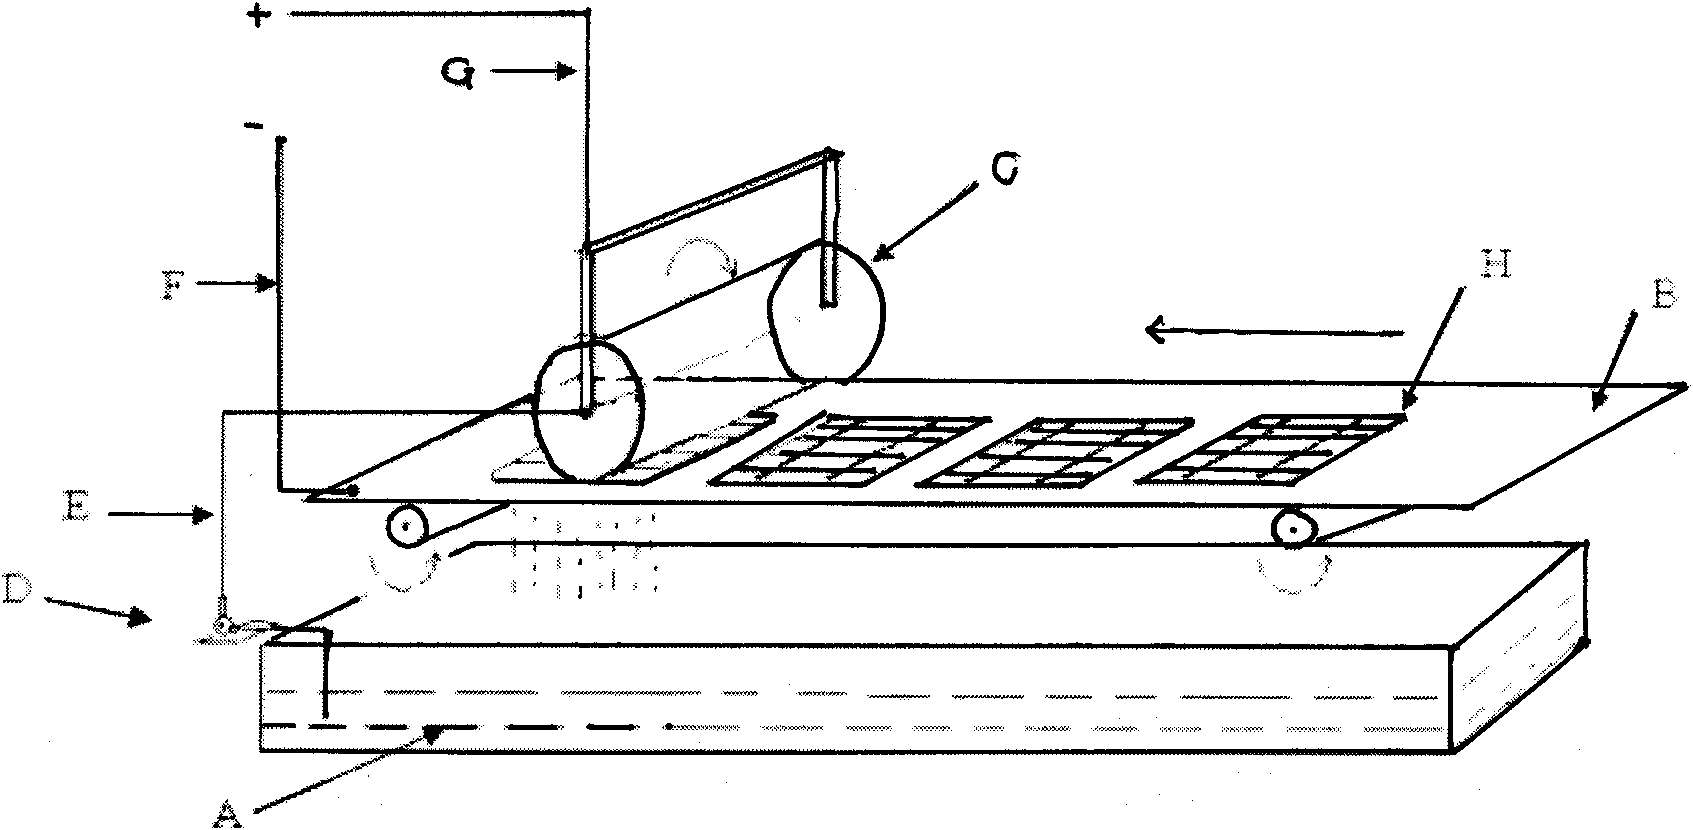 Method for preparing solar array electrode by electro-brush plating